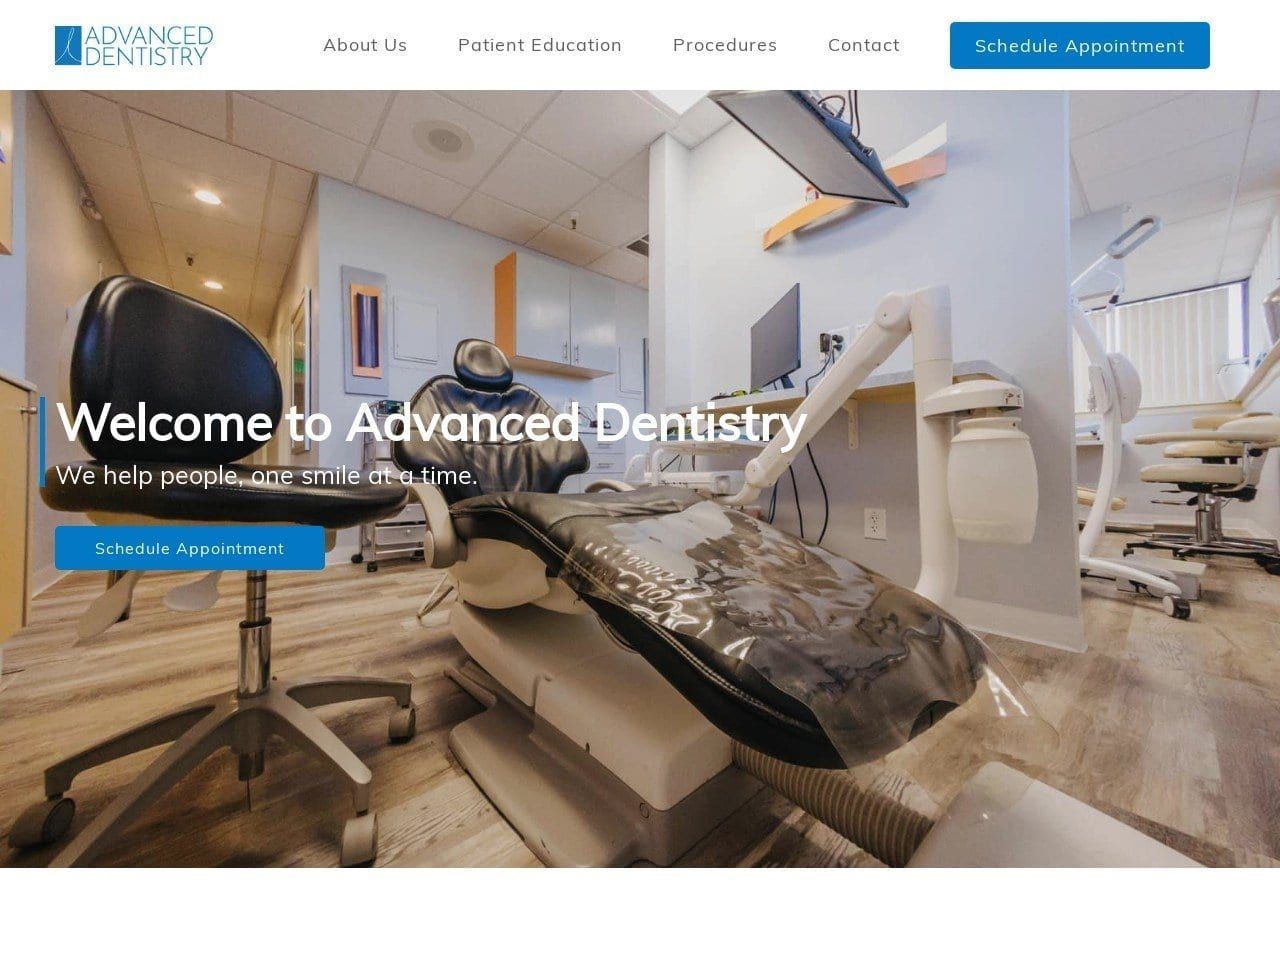 Advanced Dentistry Services LLC Website Screenshot from advdentistry.com